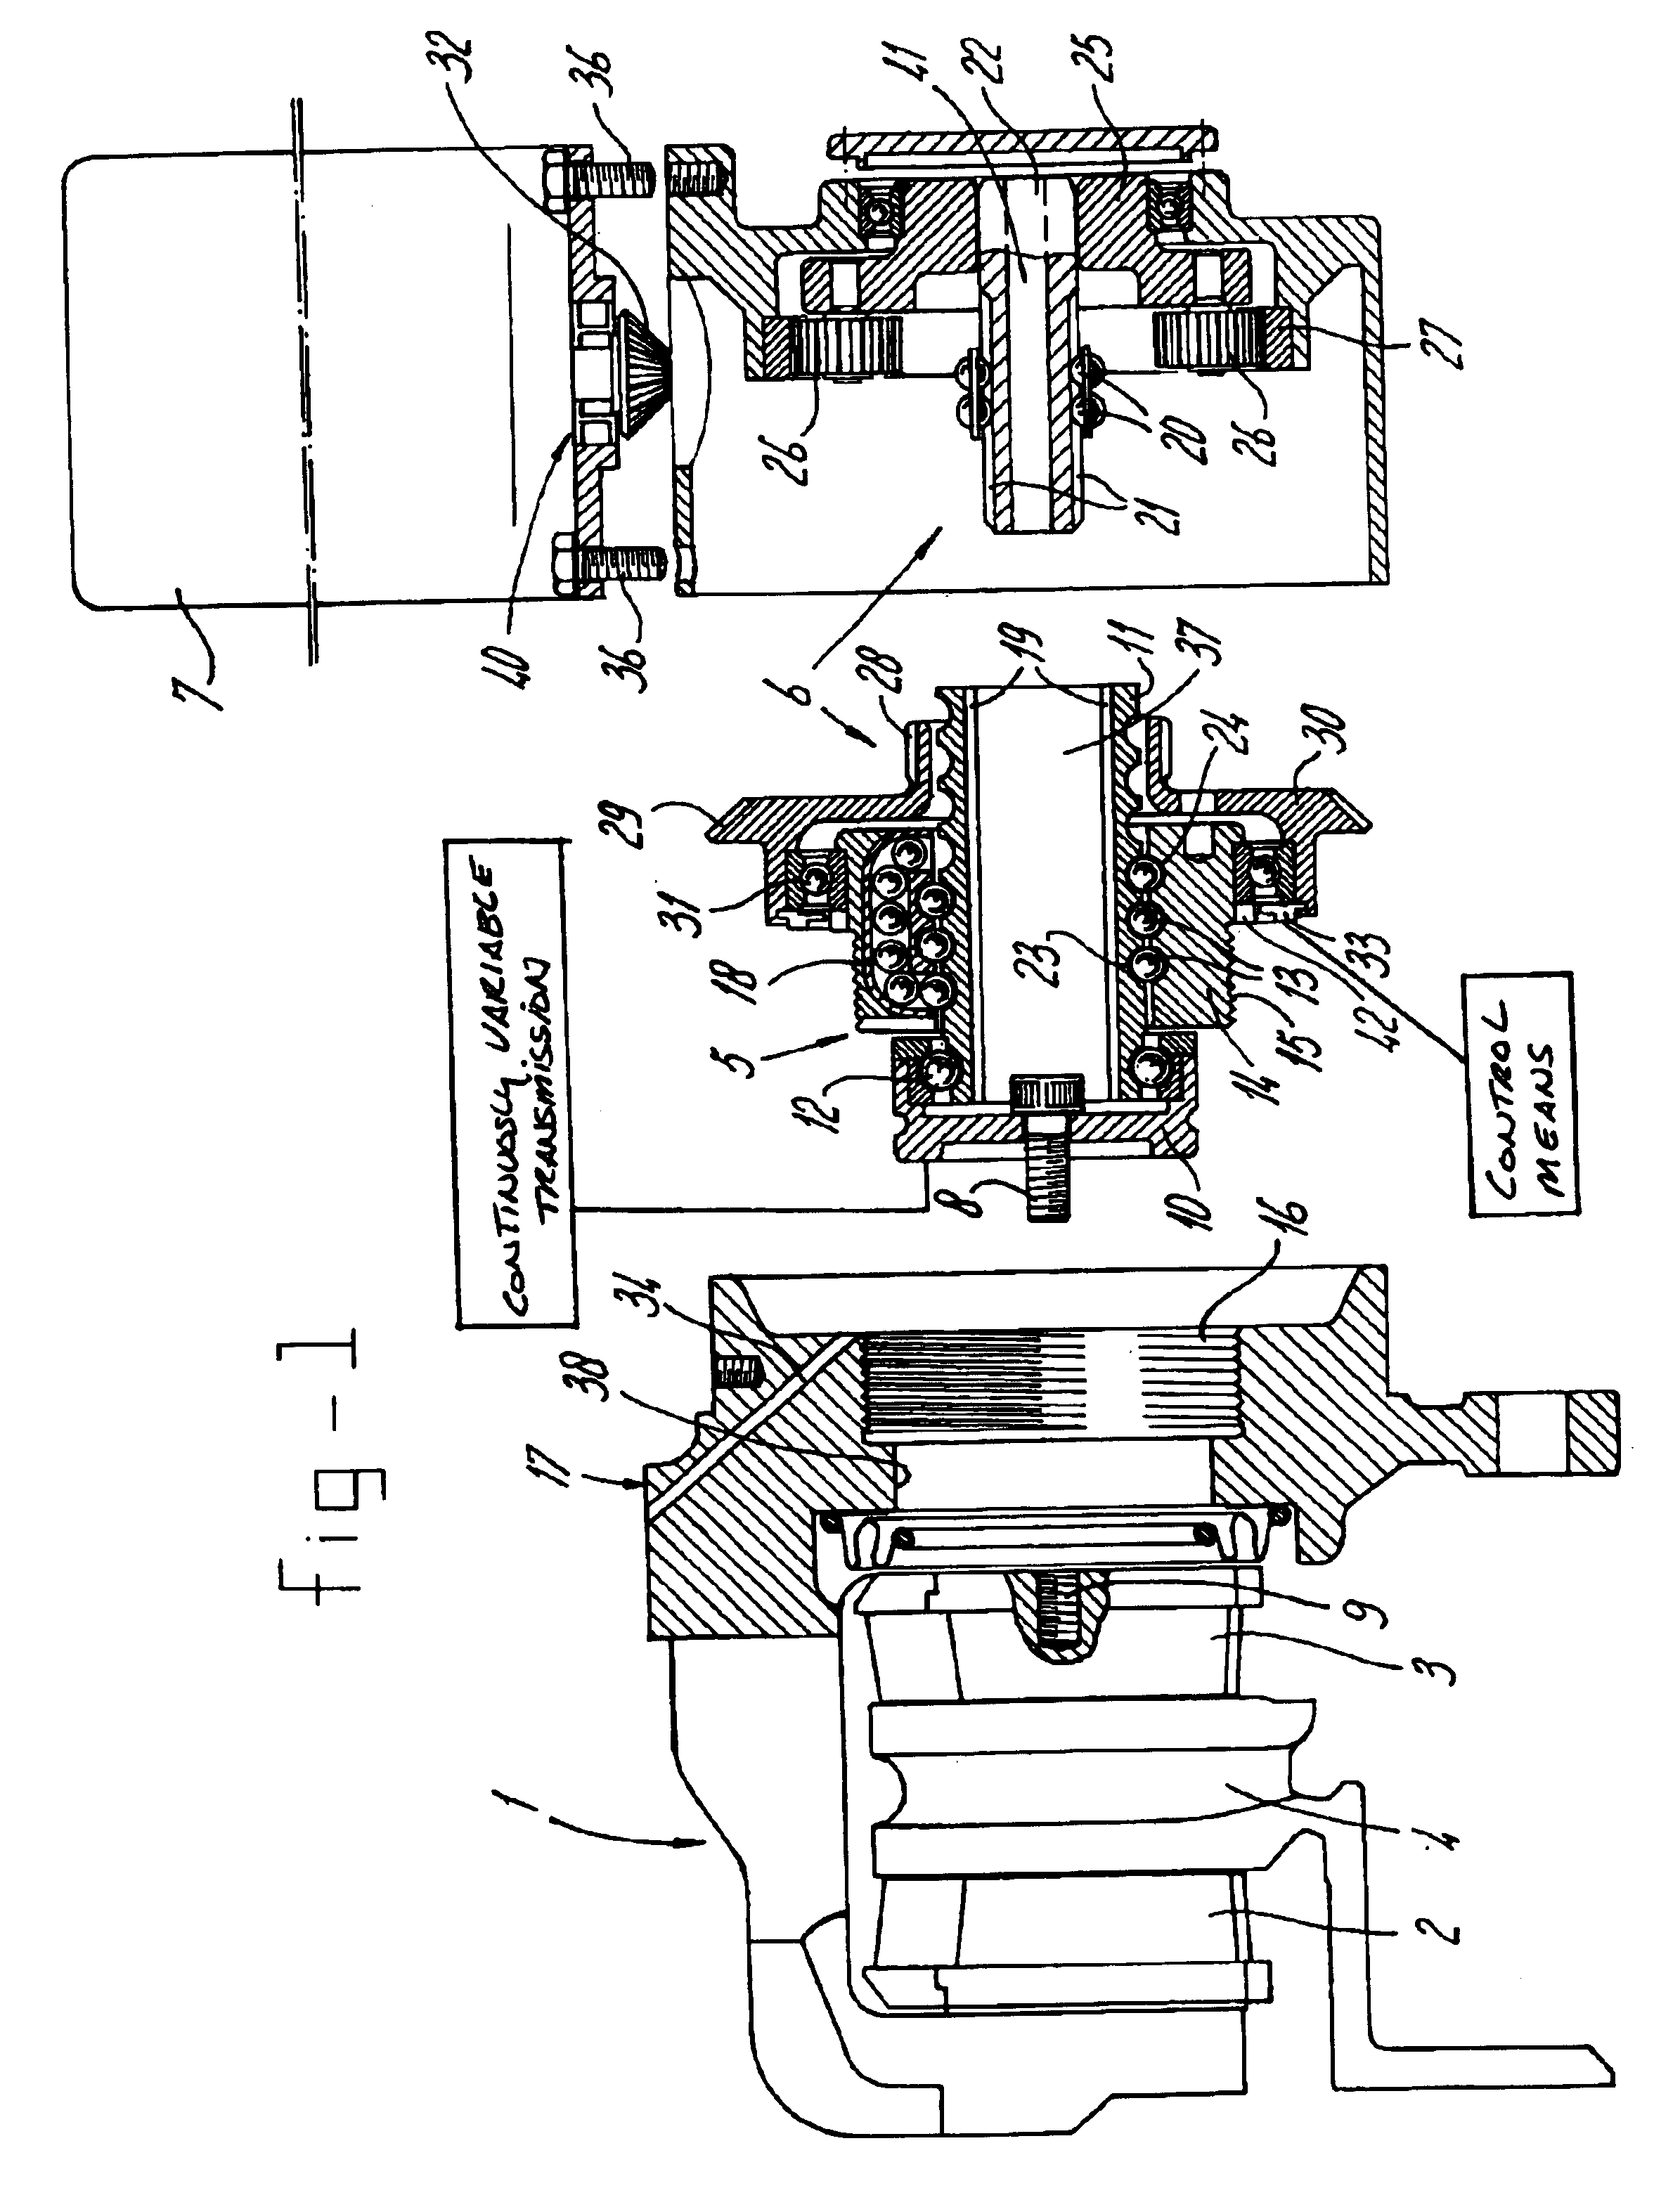 Screw actuator, and brake caliper comprising such actuator